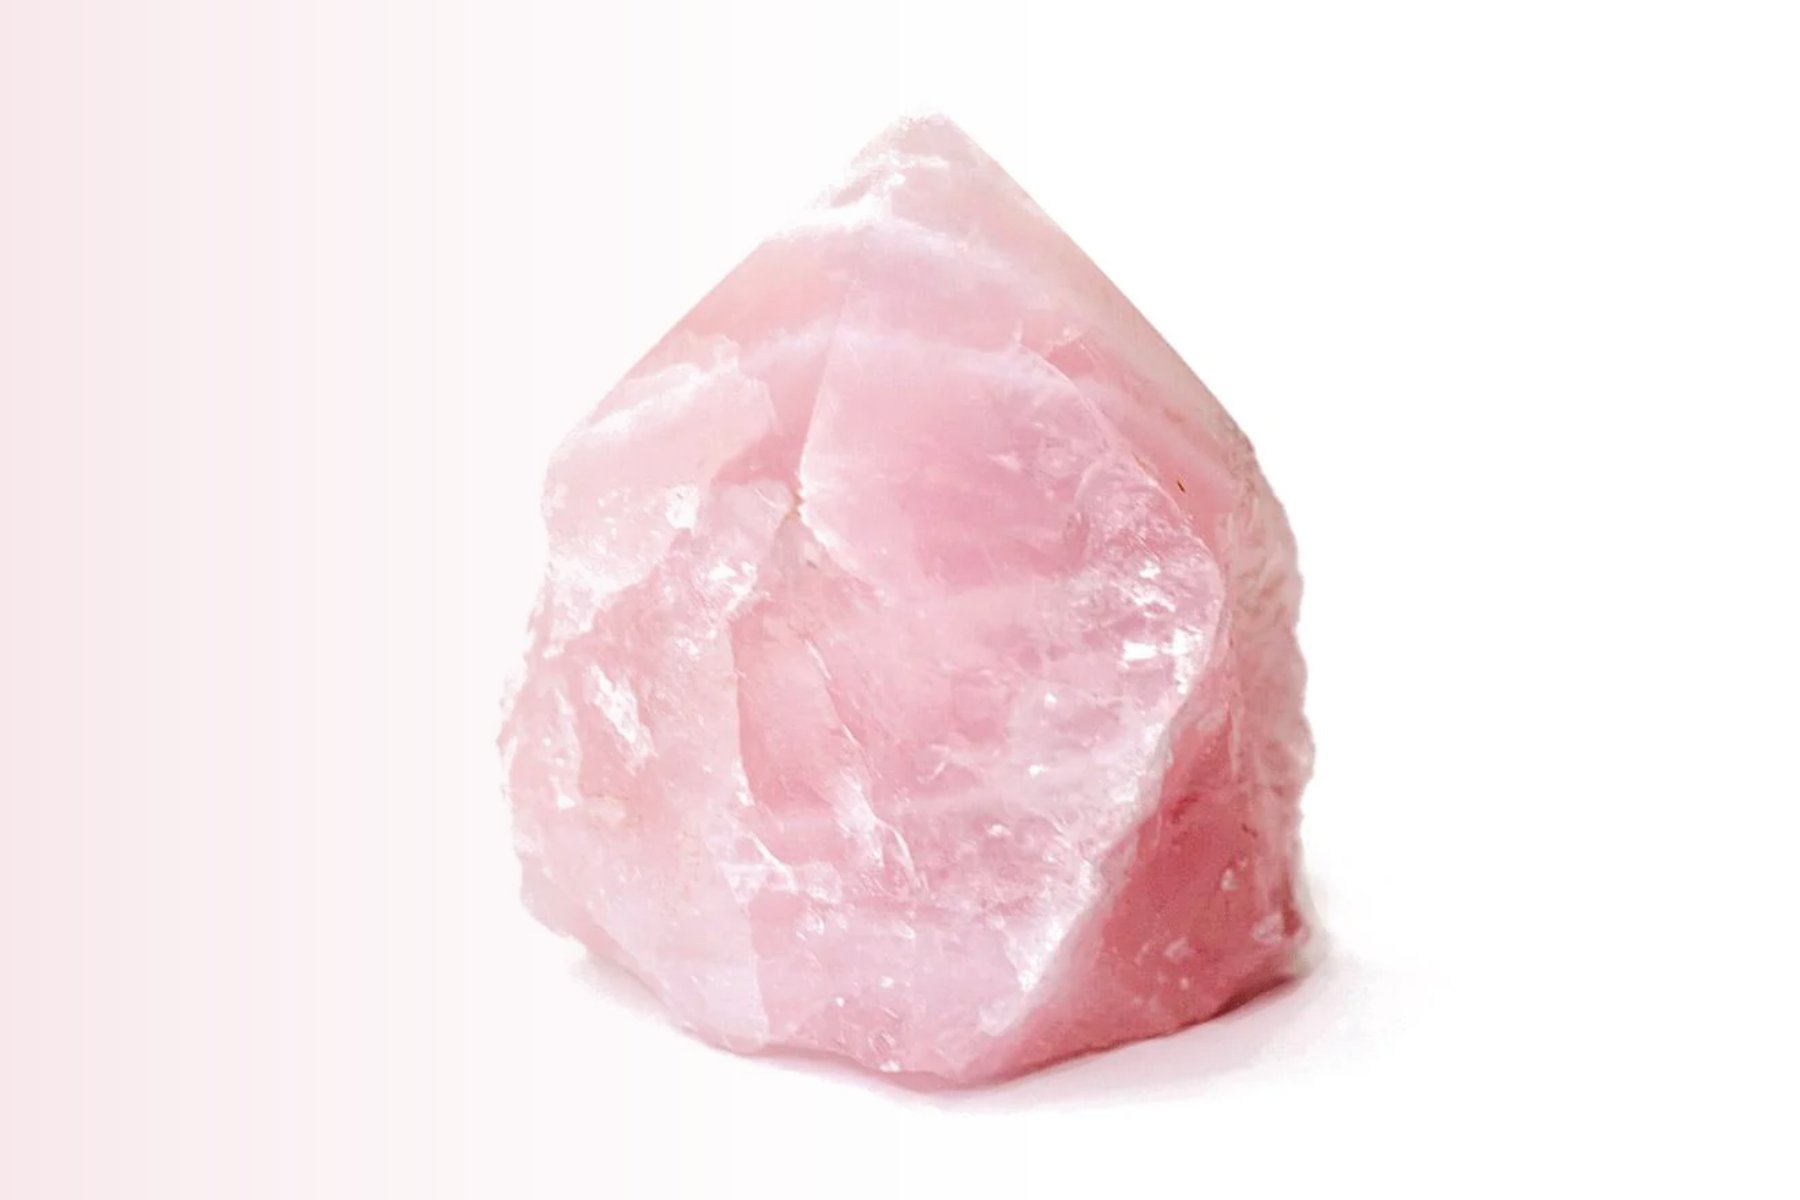 Rock-formed rose quartz stone